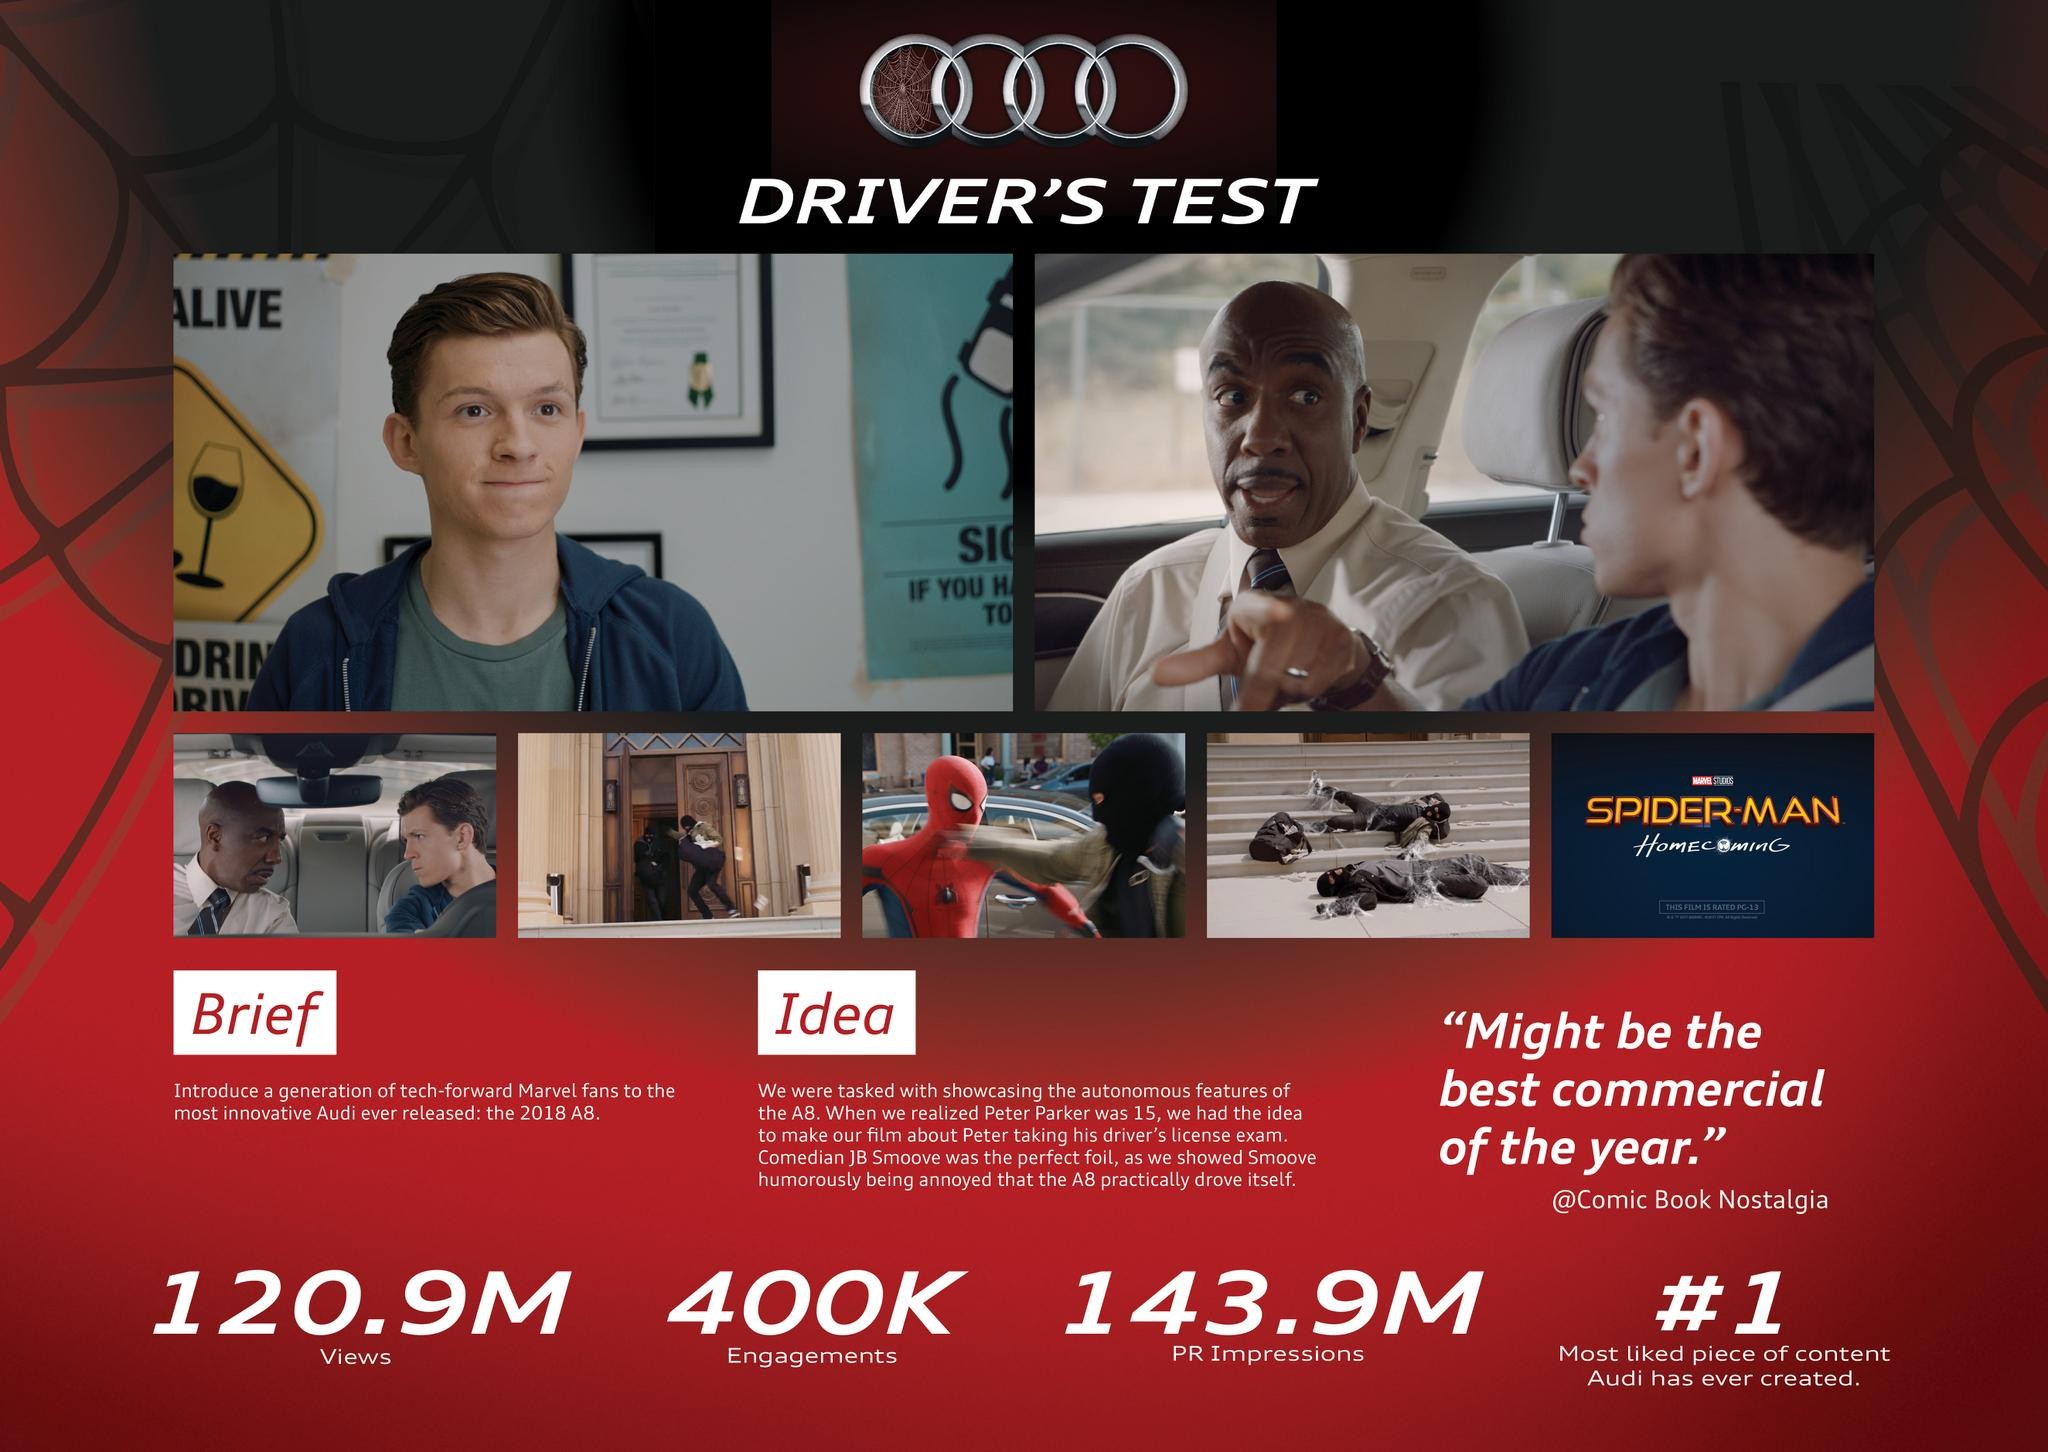 Audi & Spider-Man "Driver's Test"